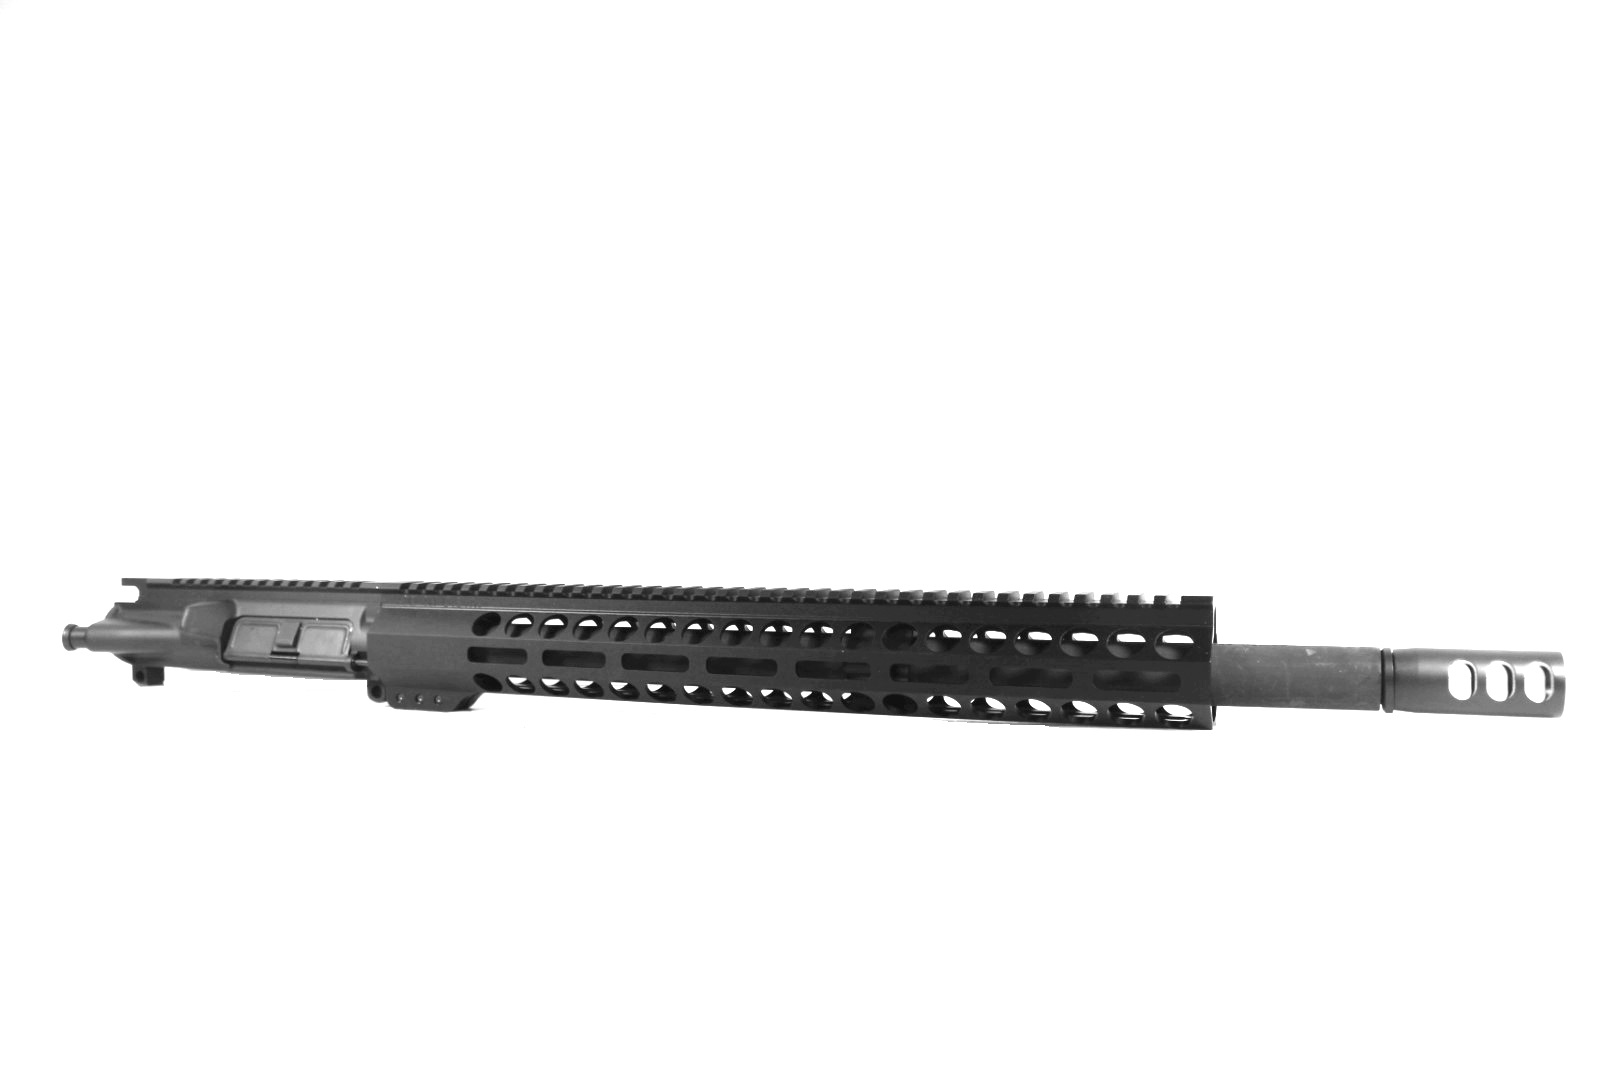 18 inch AR-15 AR15 12.7x42 (50 Beowulf) Keymod M-LOK Upper